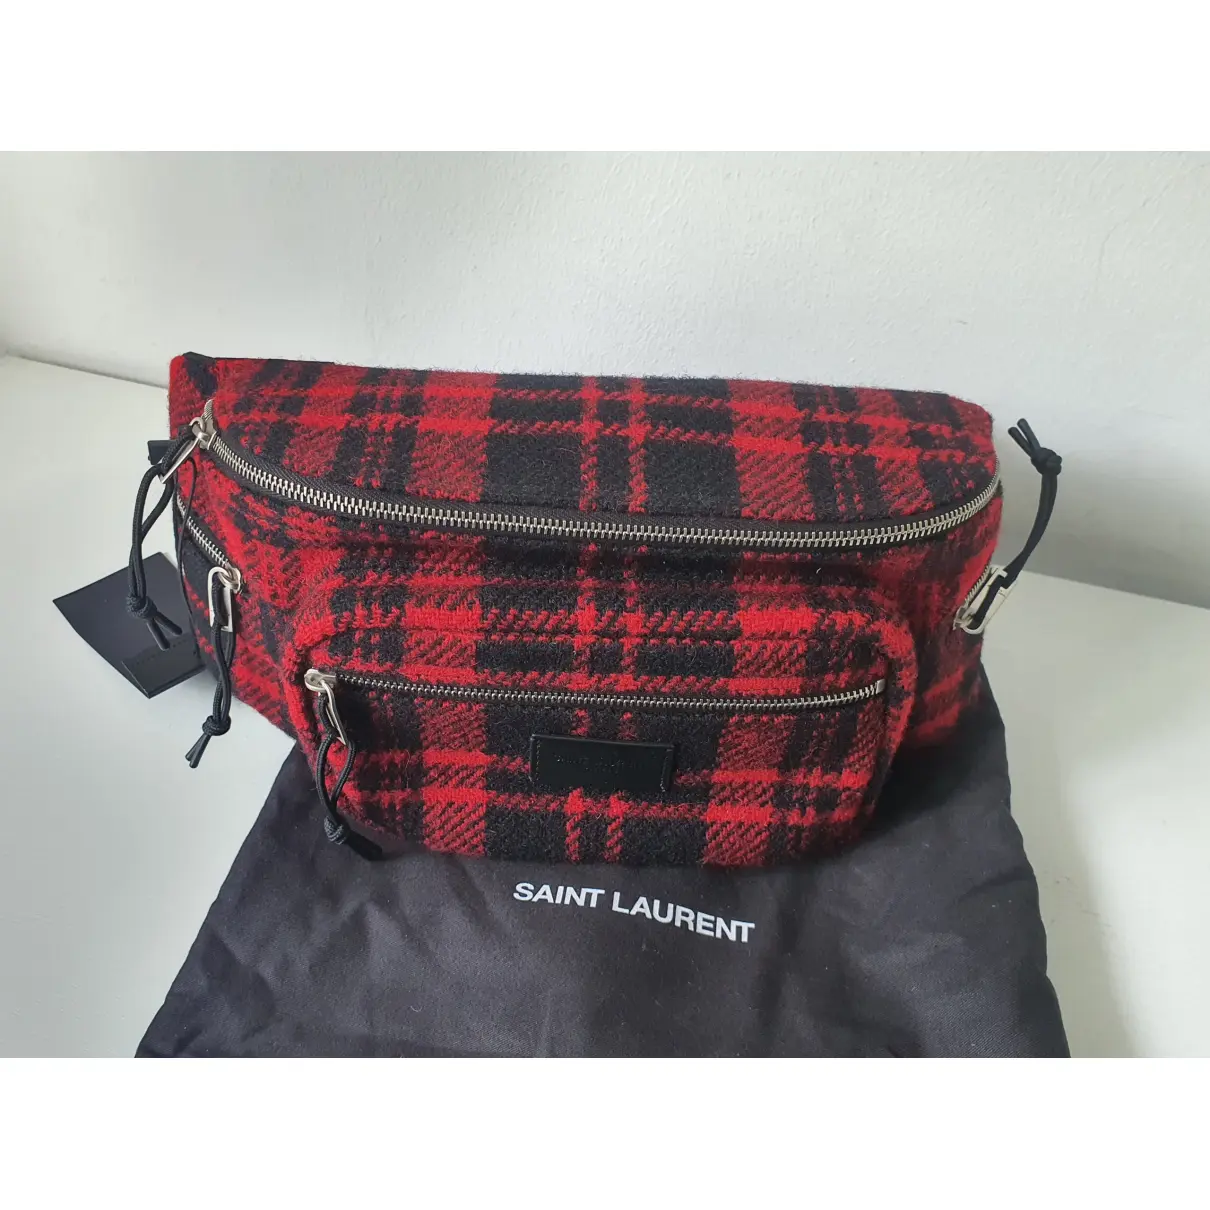 Wool belt bag Saint Laurent